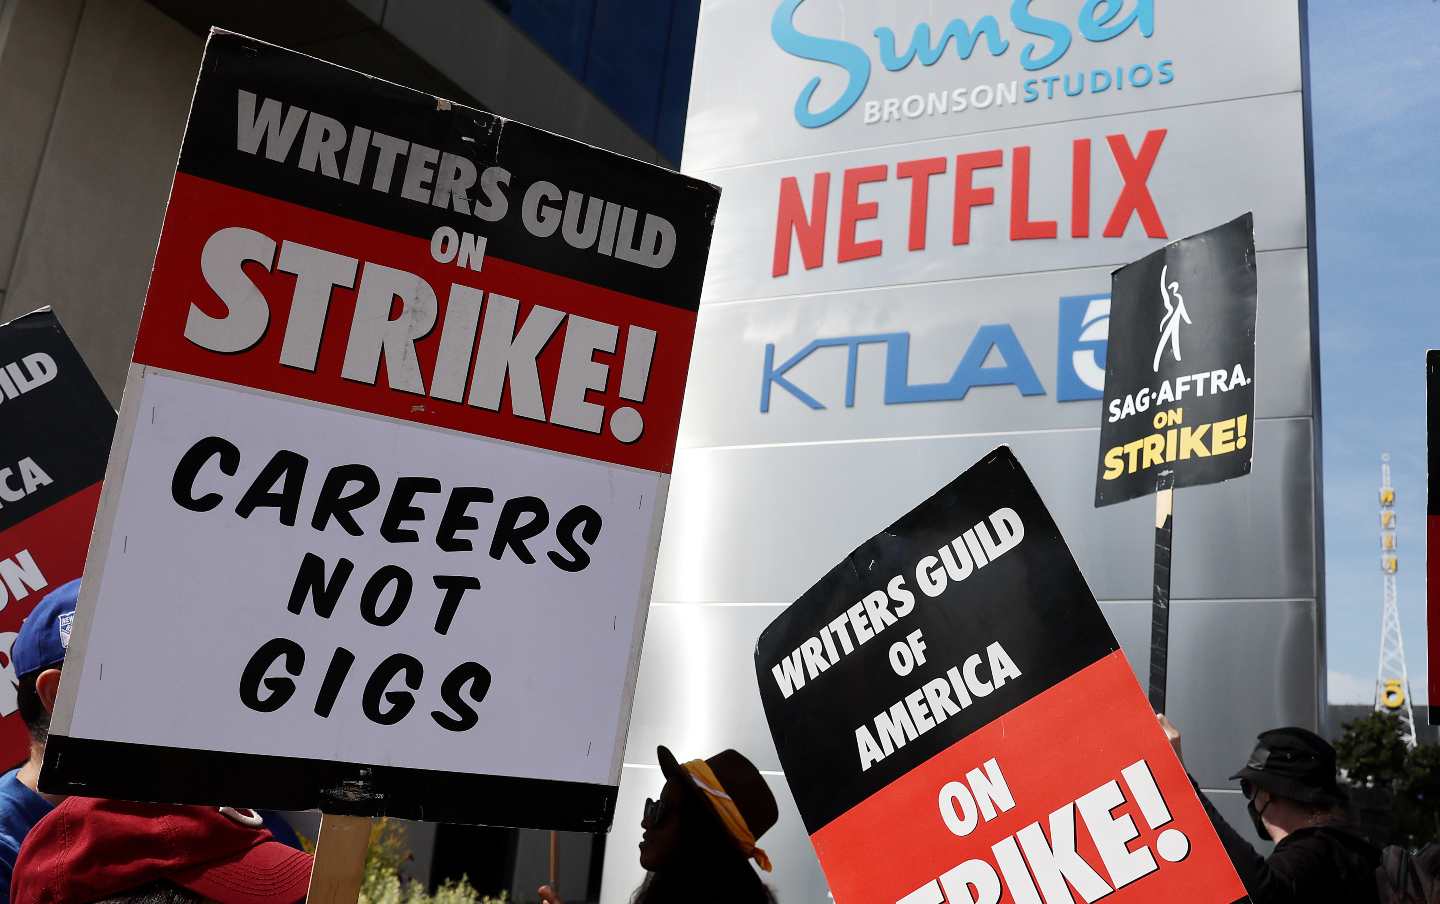 Striking writers picket the Netflix studio in Los Angeles